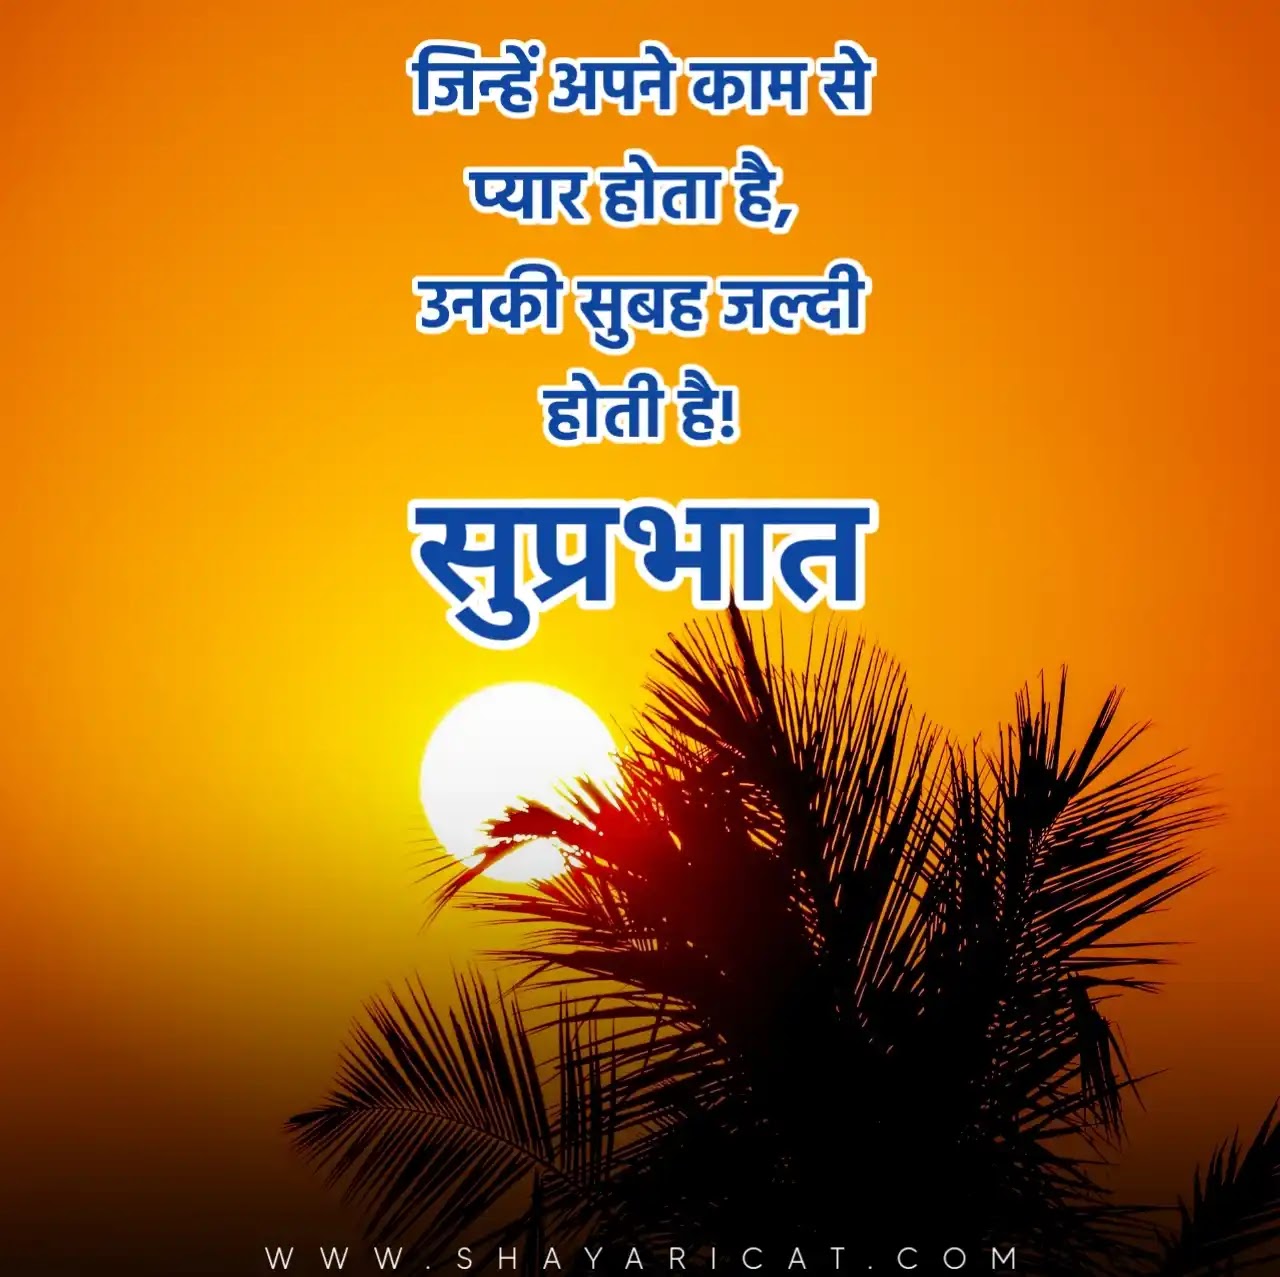 50+] Good Morning Quotes In Hindi | गुड मॉर्निंग ...